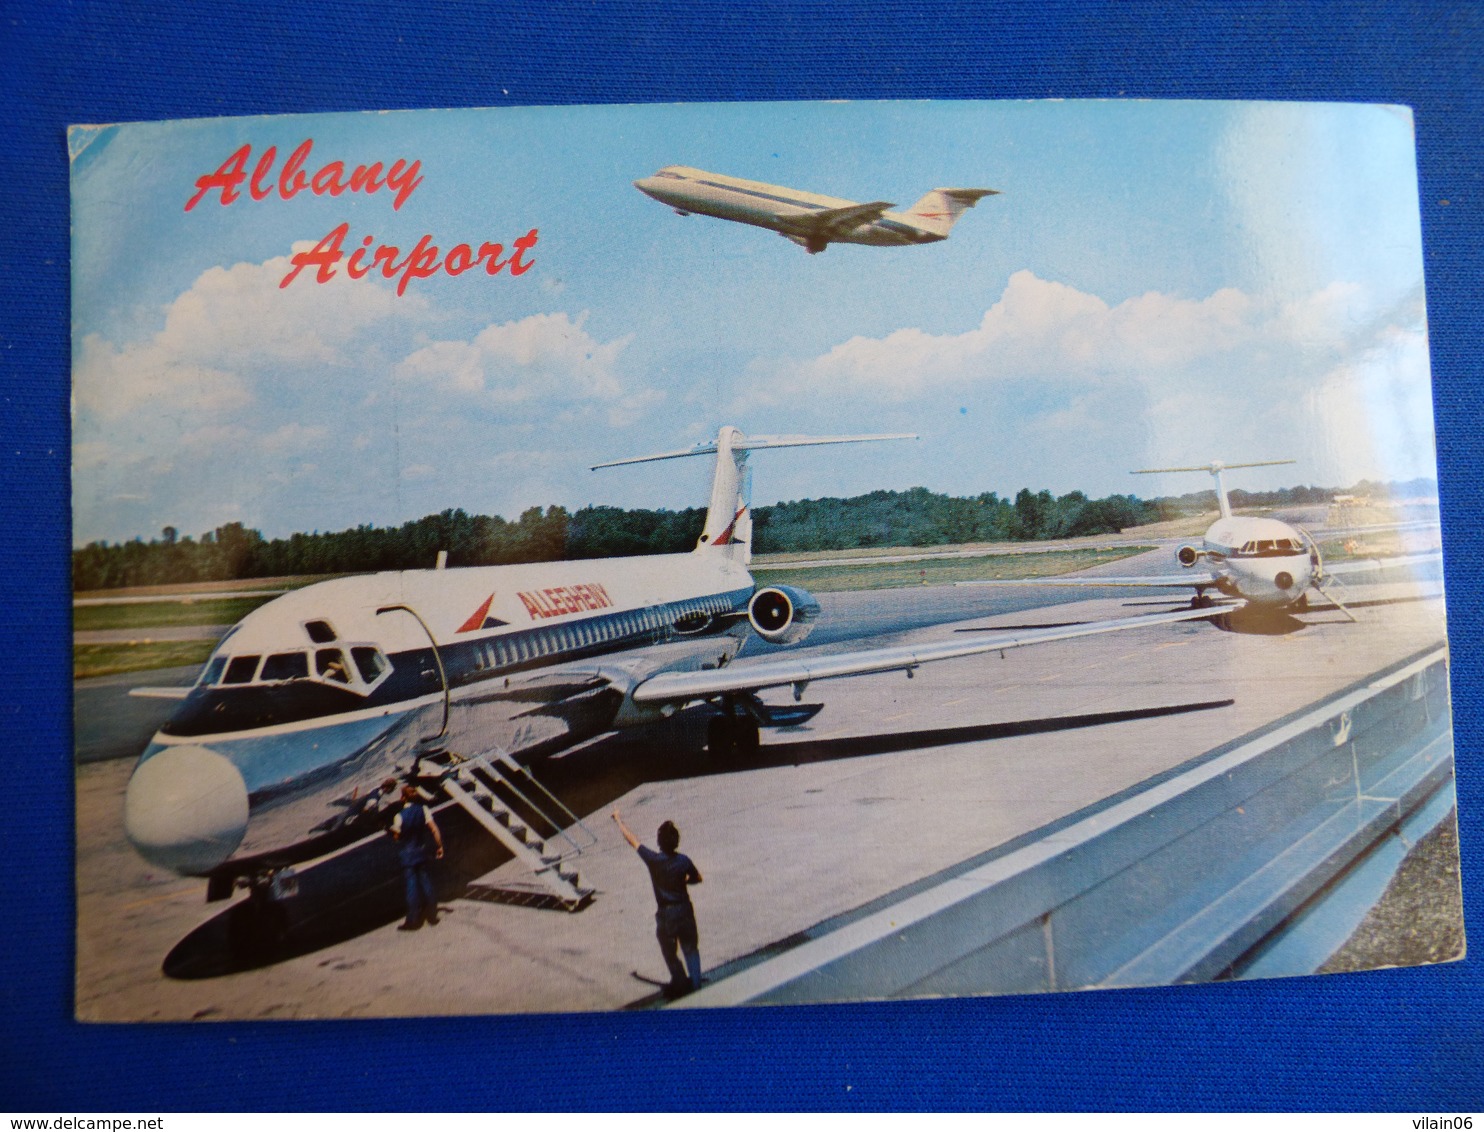 AEROPORT / AIRPORT / FLUGHAFEN    ALBANY AIRPORT  DC 9 ALLEGHENY - Aerodrome